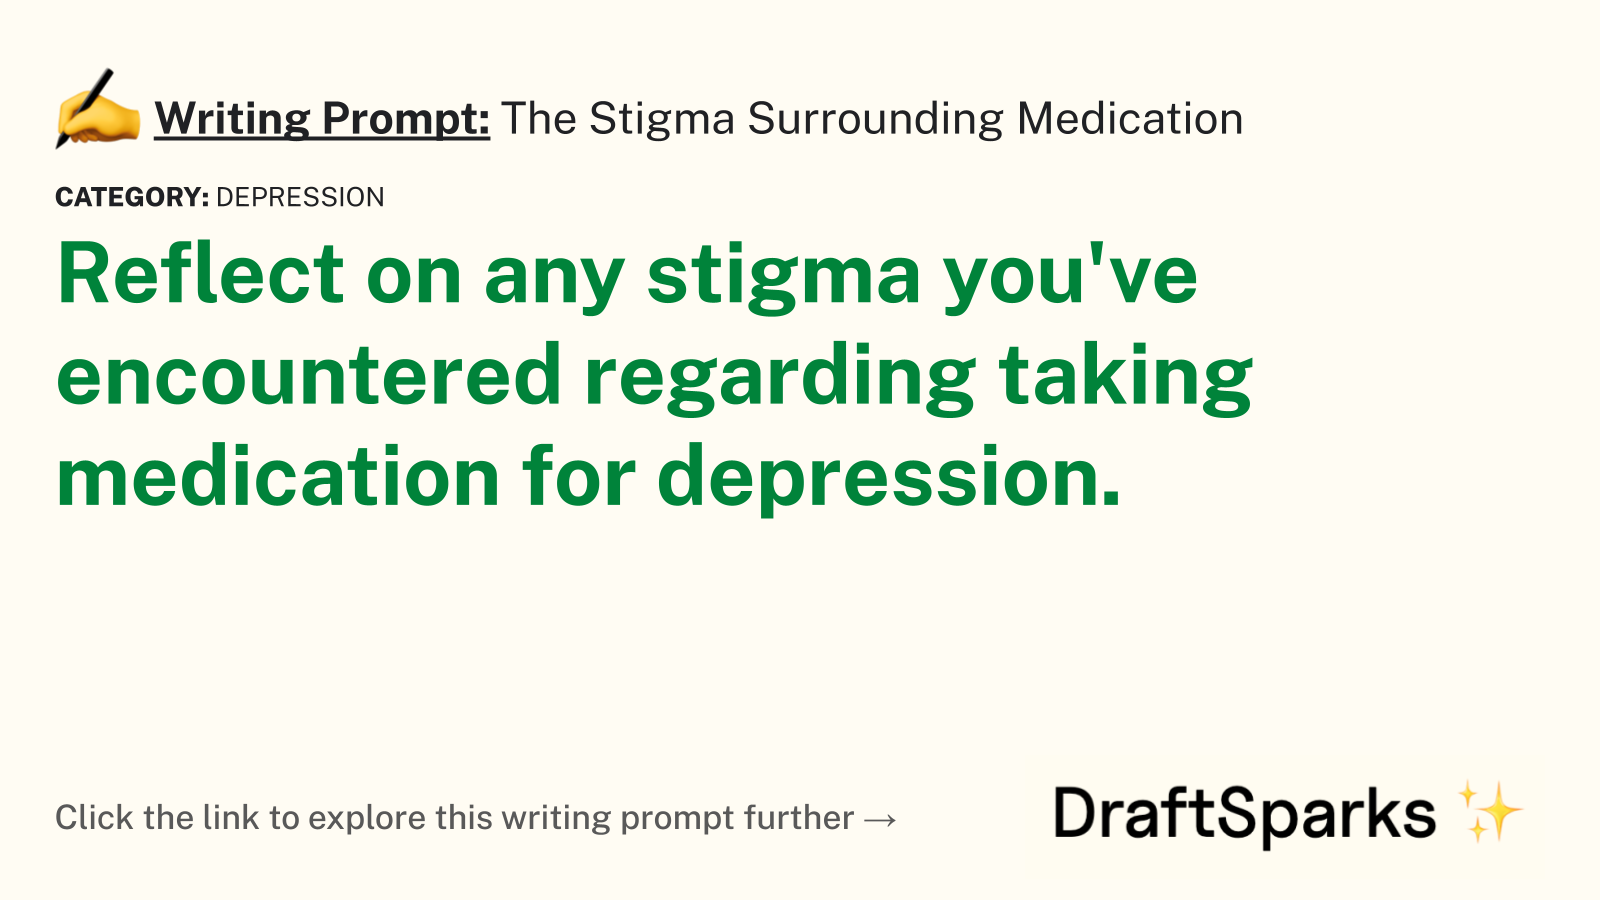 The Stigma Surrounding Medication